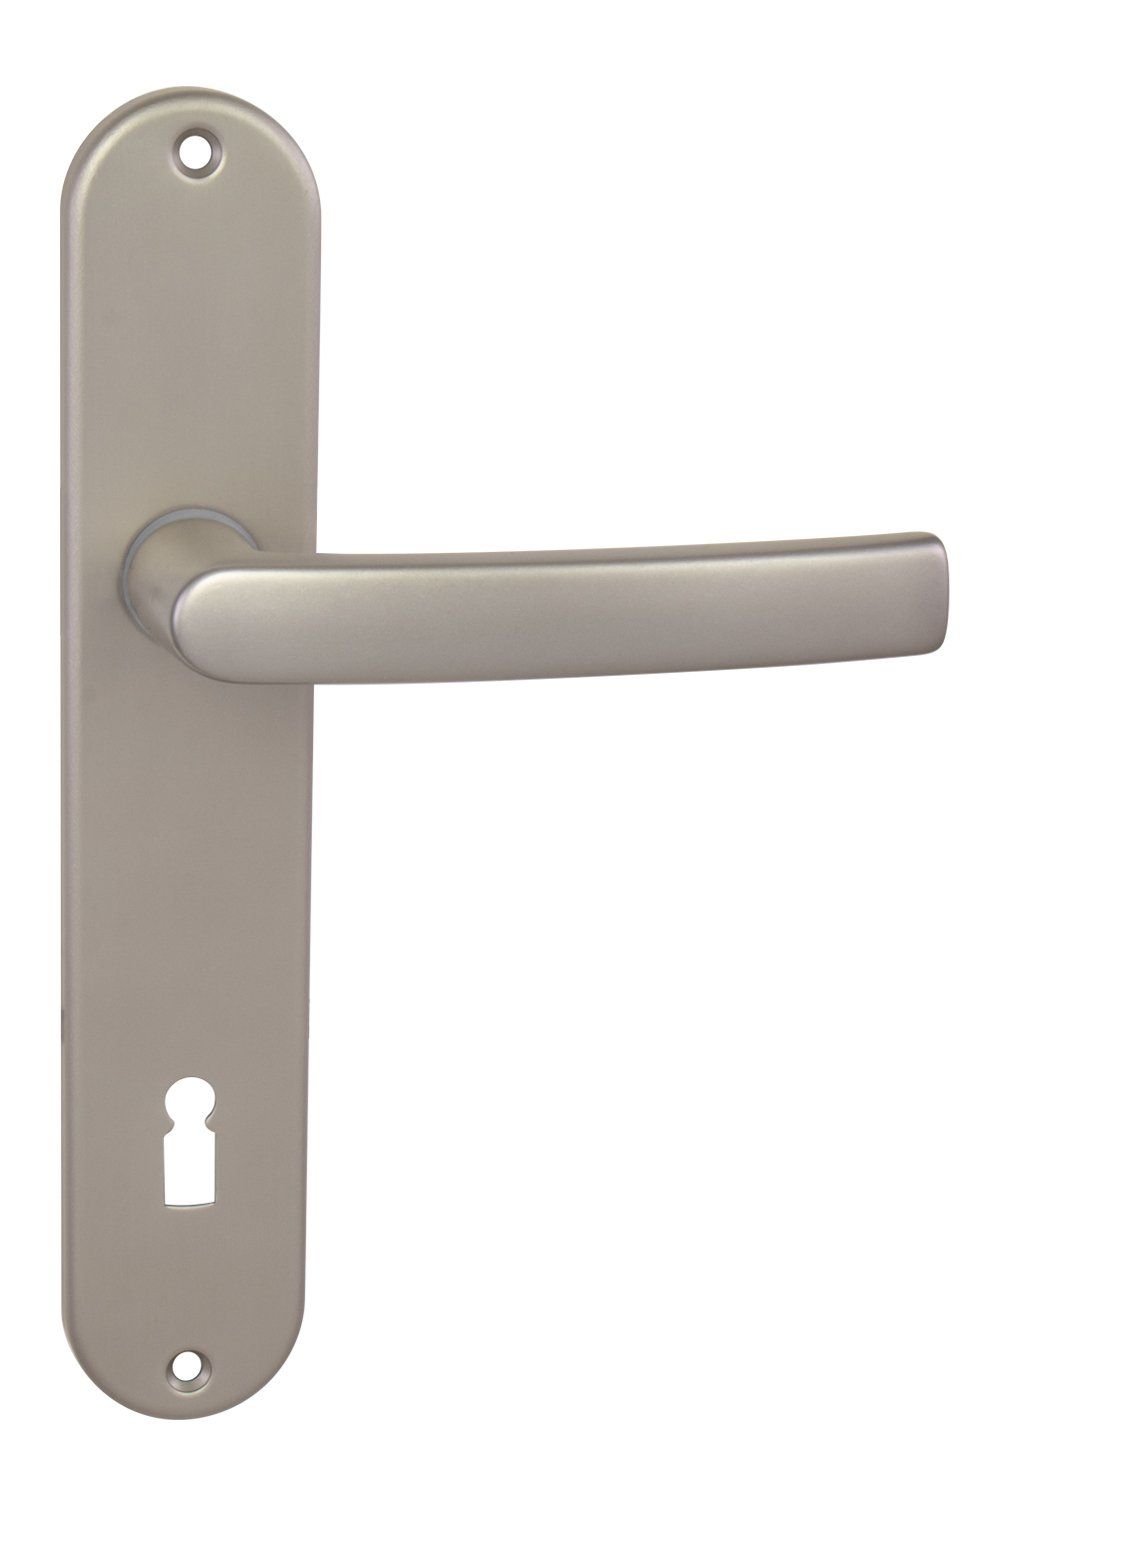 BA - MIRA - S WC kľúč, 72 mm, kľučka/kľučka